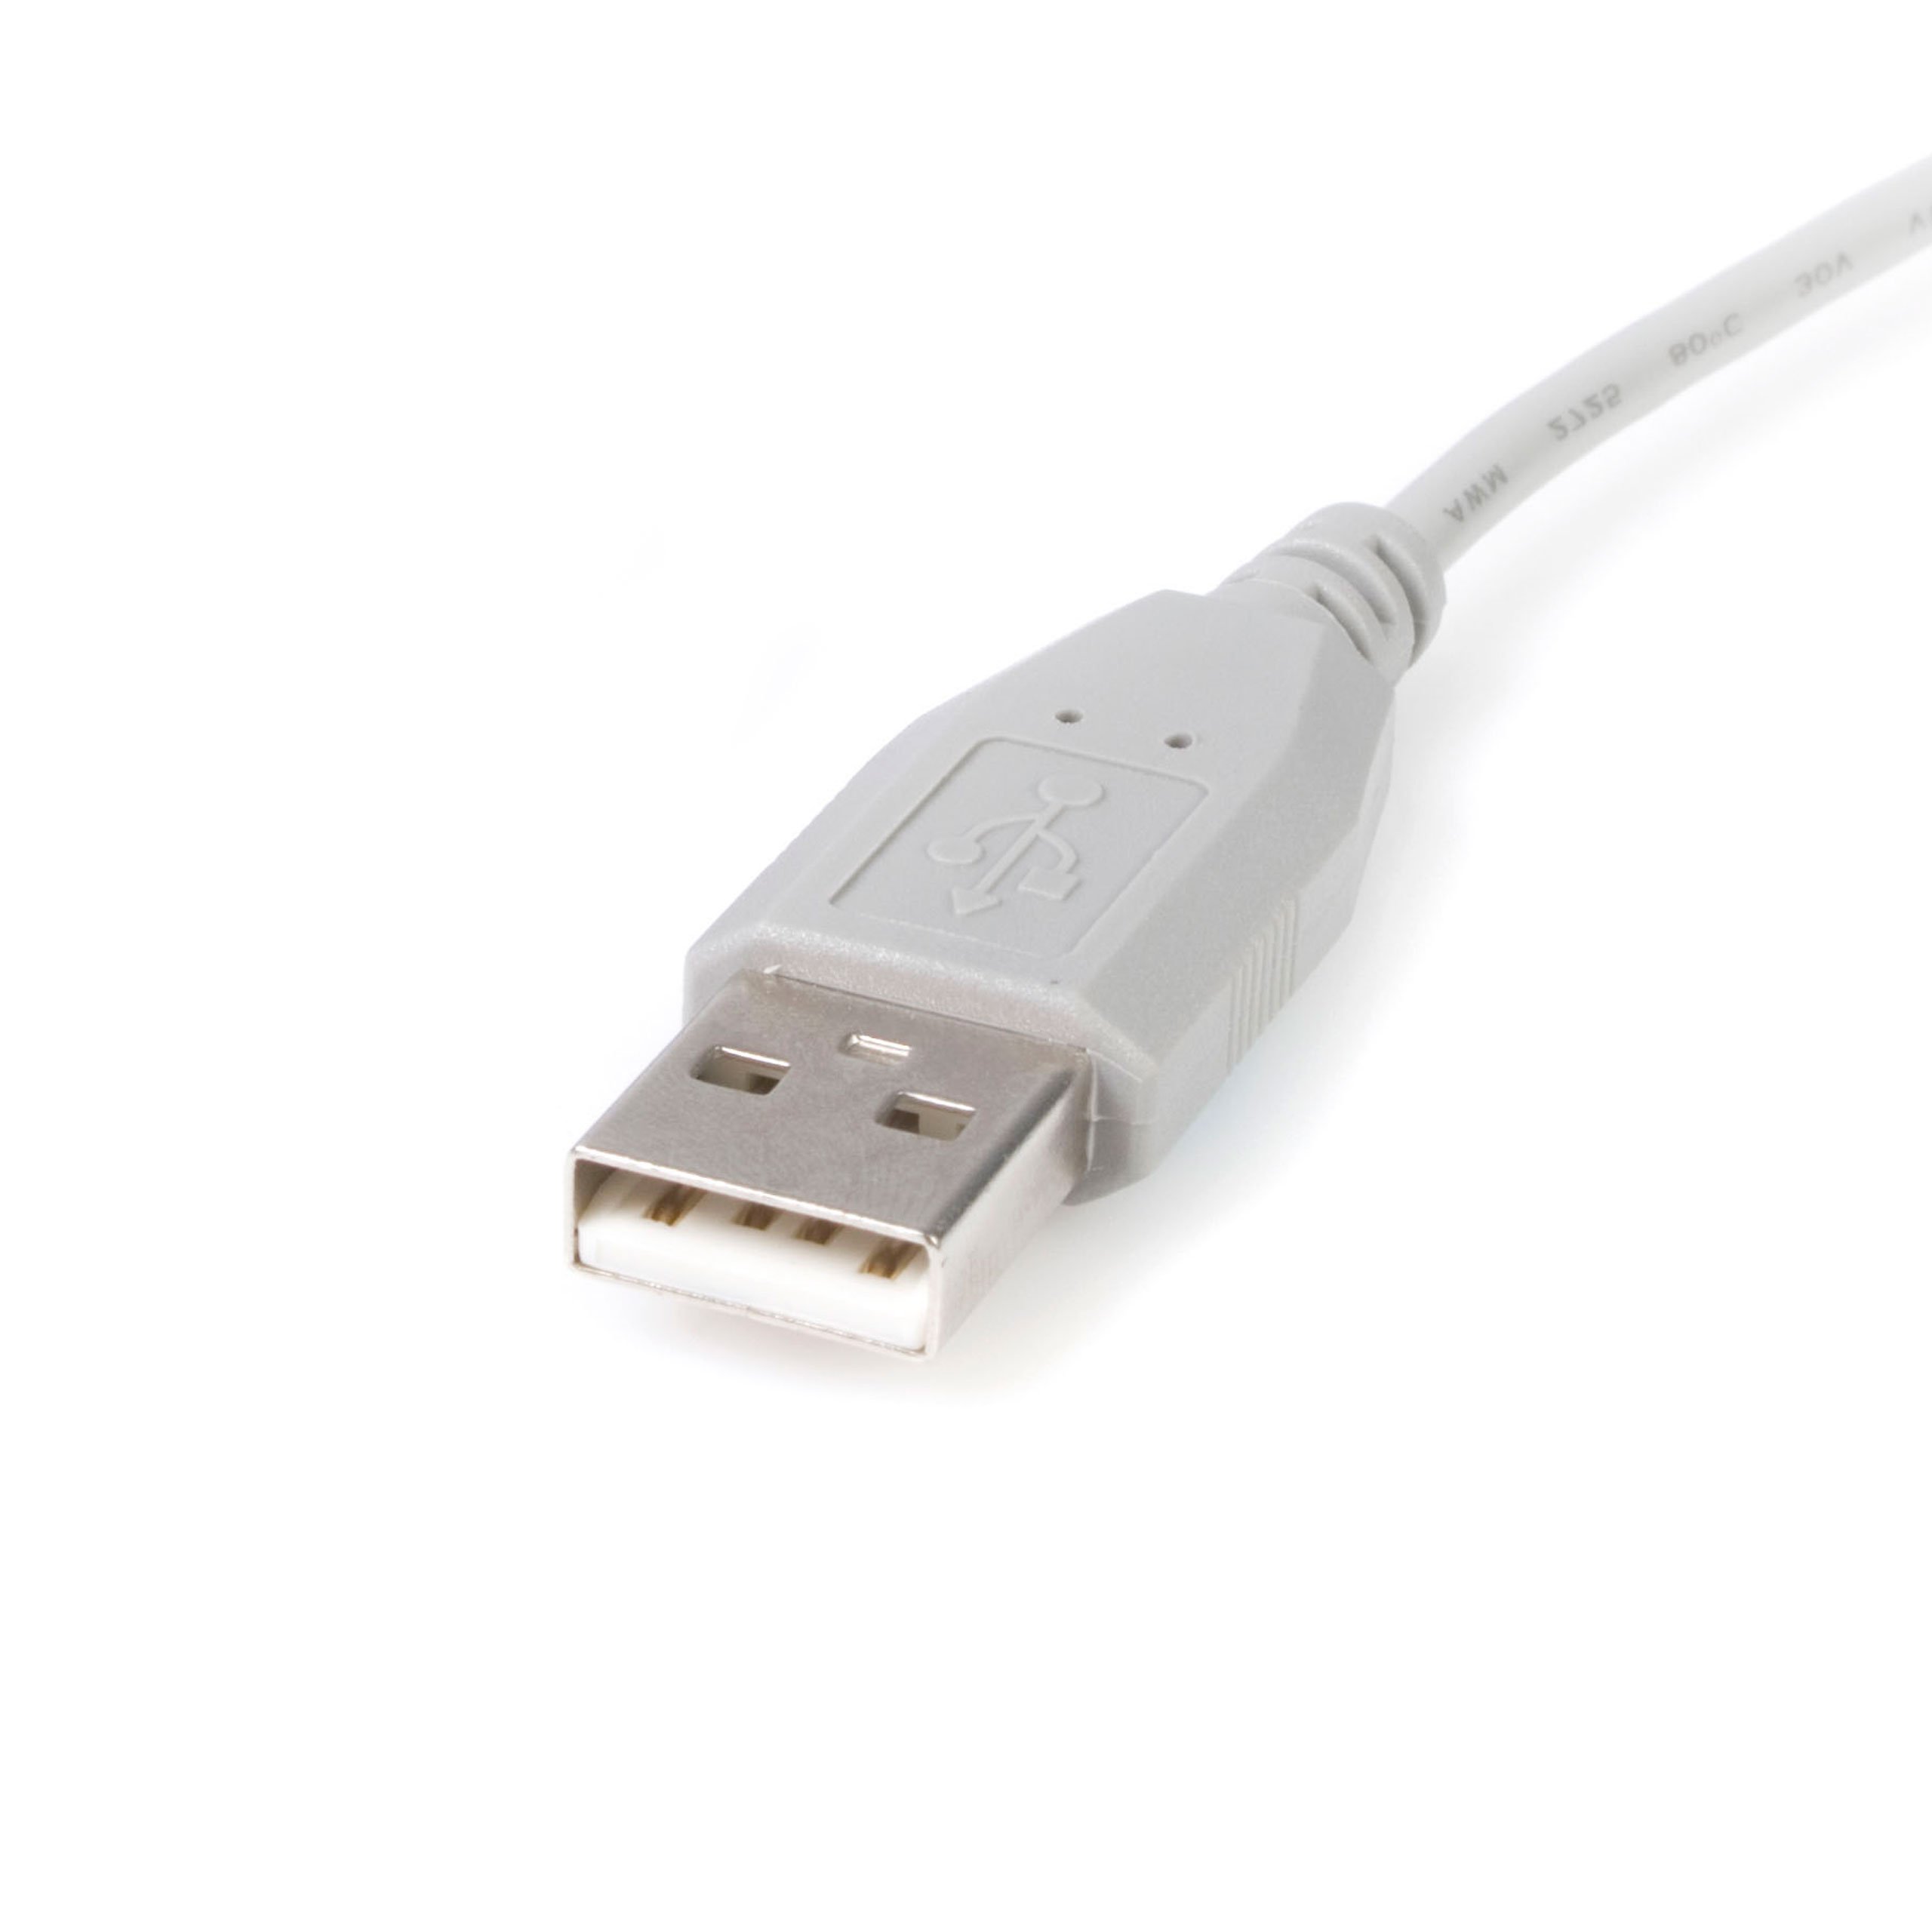 StarTech.com 3 ft. (0.9 m) USB to Mini USB Cable - USB 2.0 A to Mini B - Grey - Mini USB Cable (USB2HABM3)